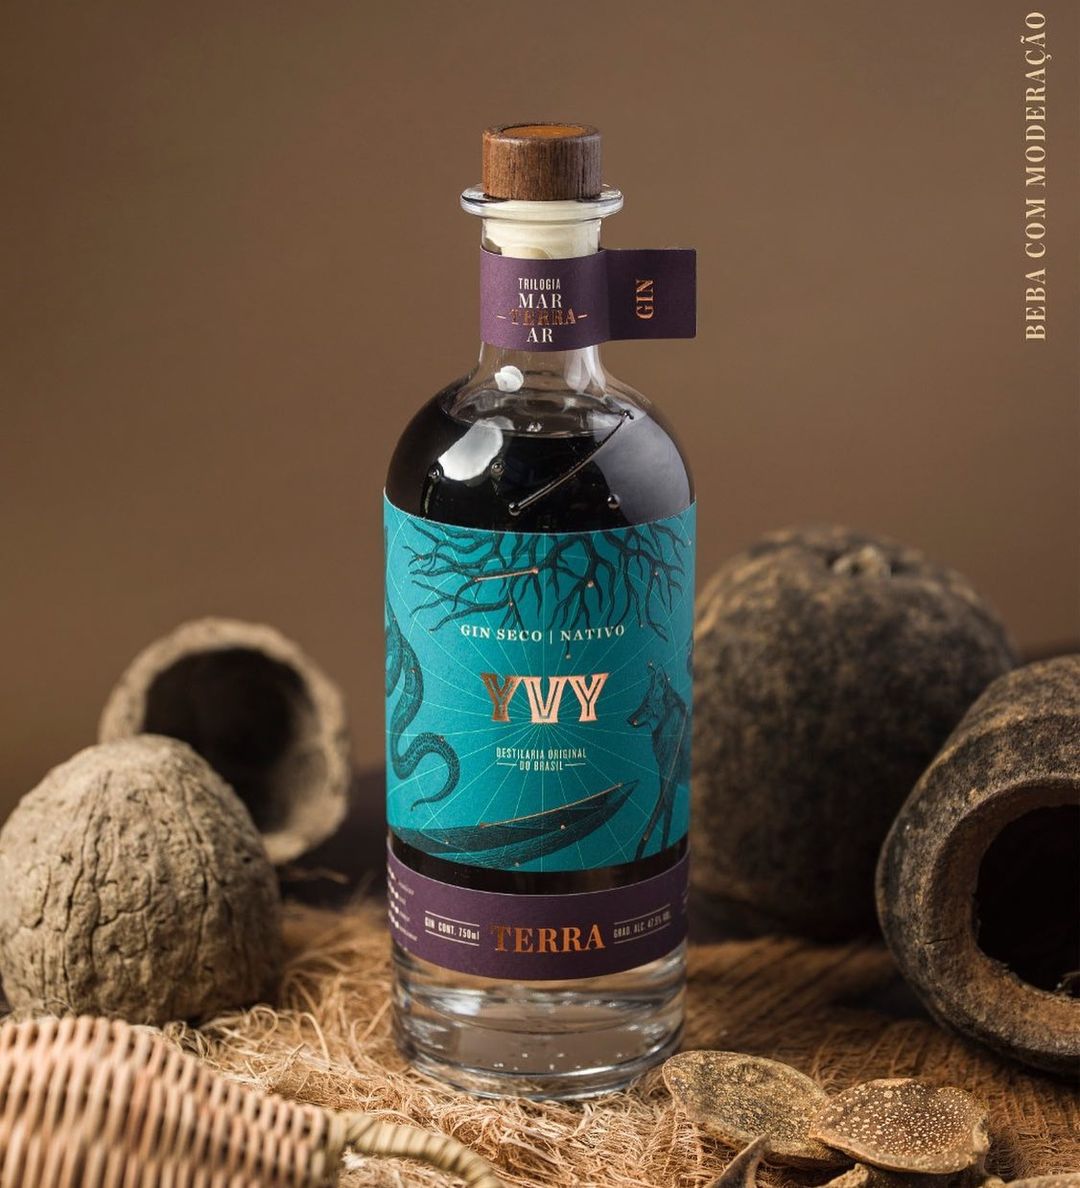 Gin YVY Trilogia Terra 750 ml